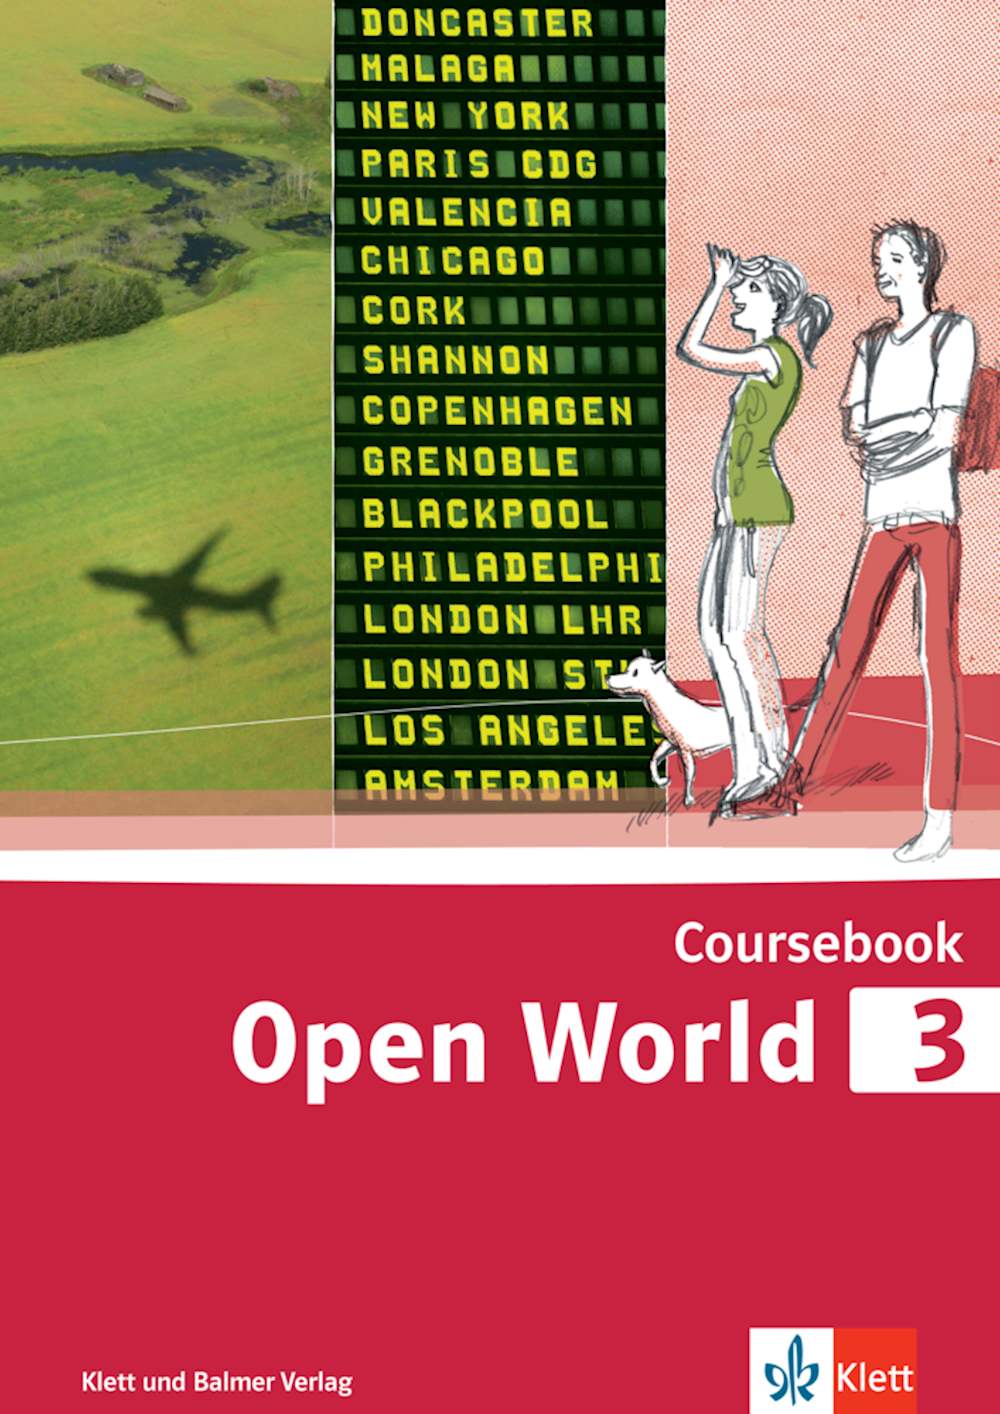 Open World 3, Coursebook 